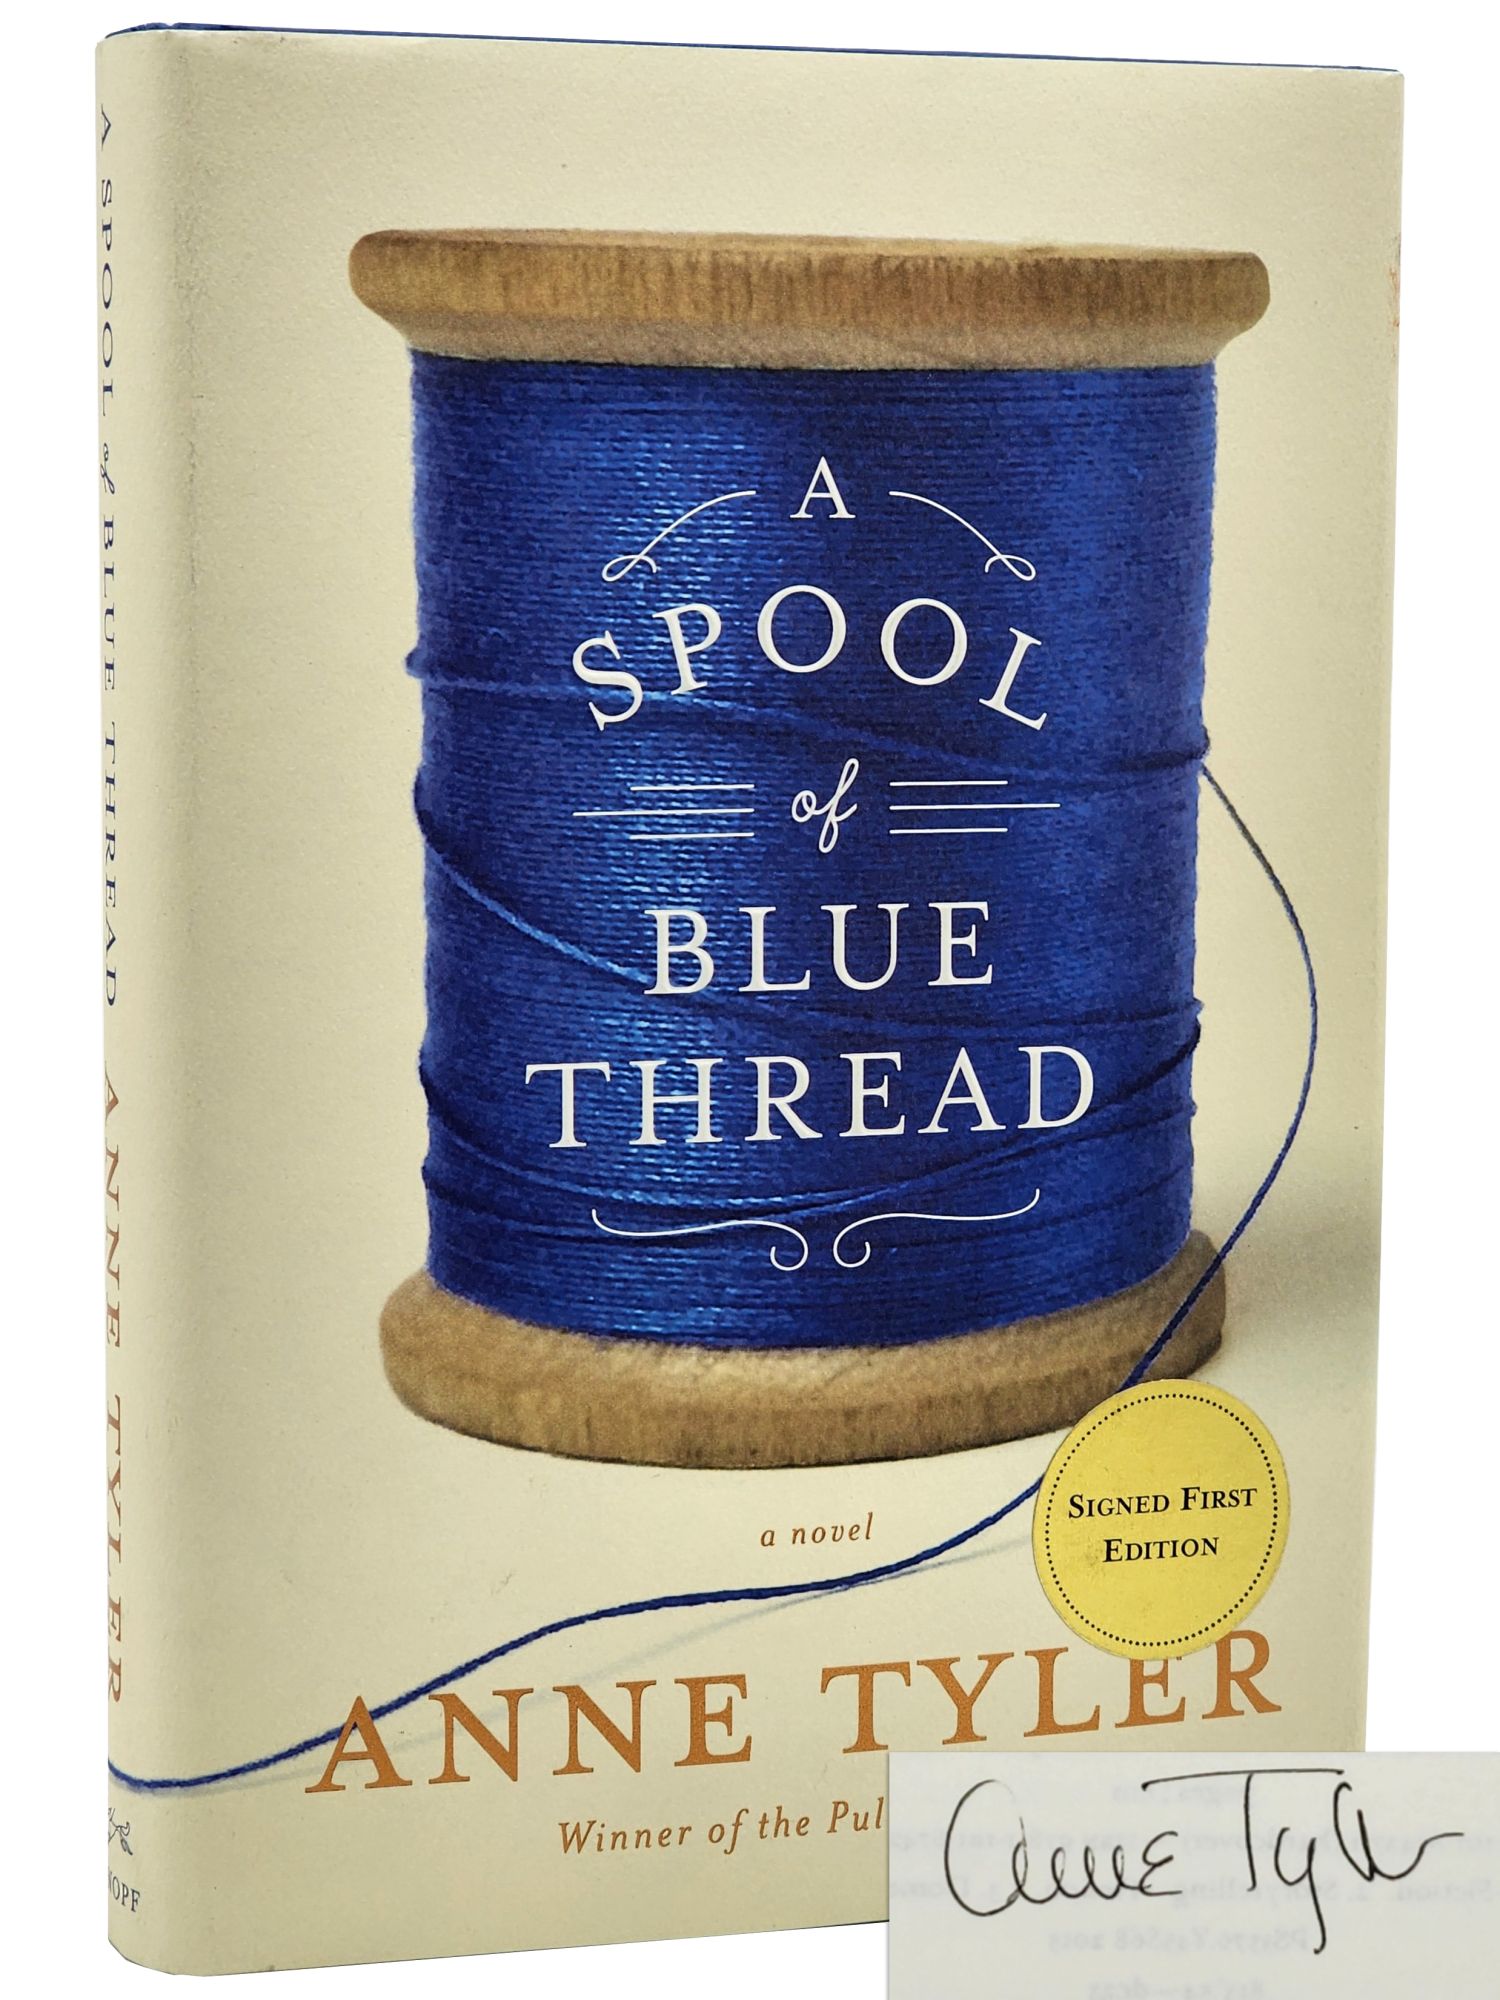 [Book #27294] A SPOOL OF BLUE THREAD. Anne Tyler.